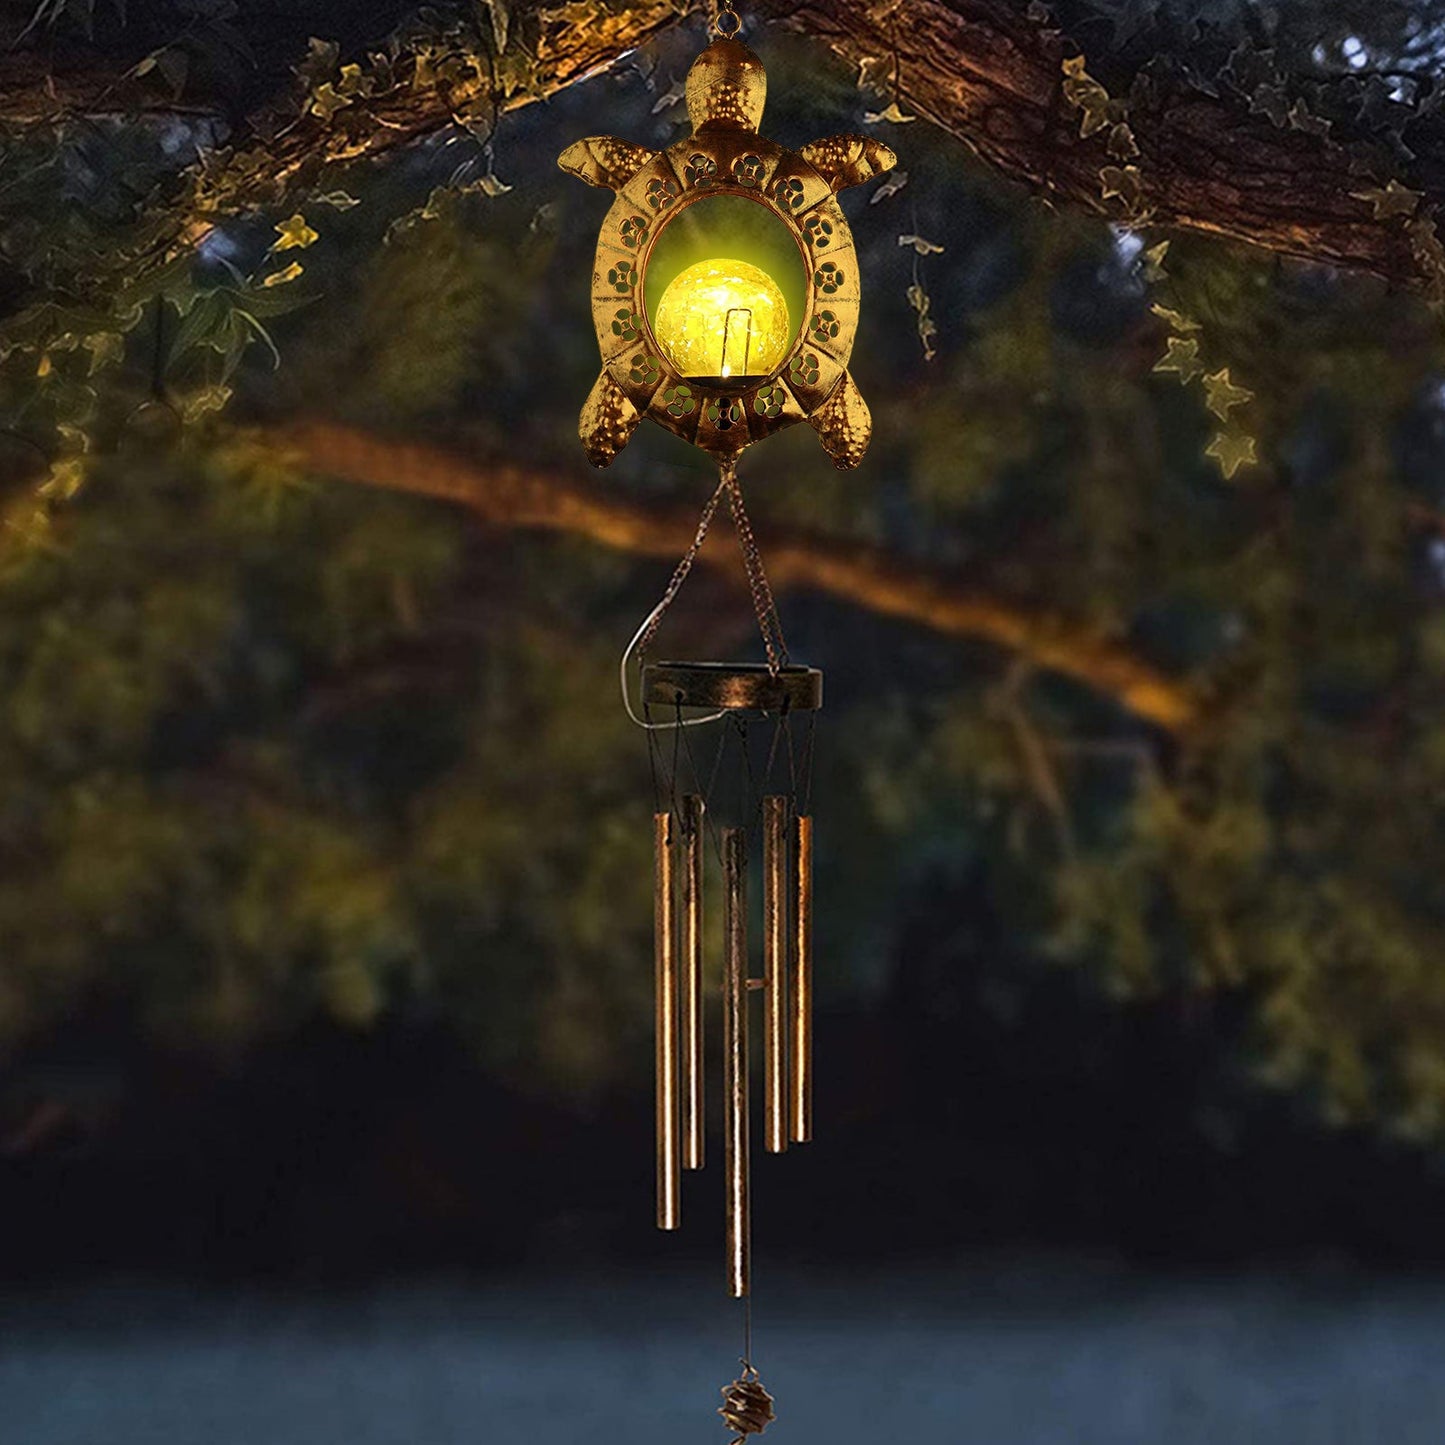 Luz solar de carillón de viento de tortuga con bola de cristal craquelada para decoración al aire libre